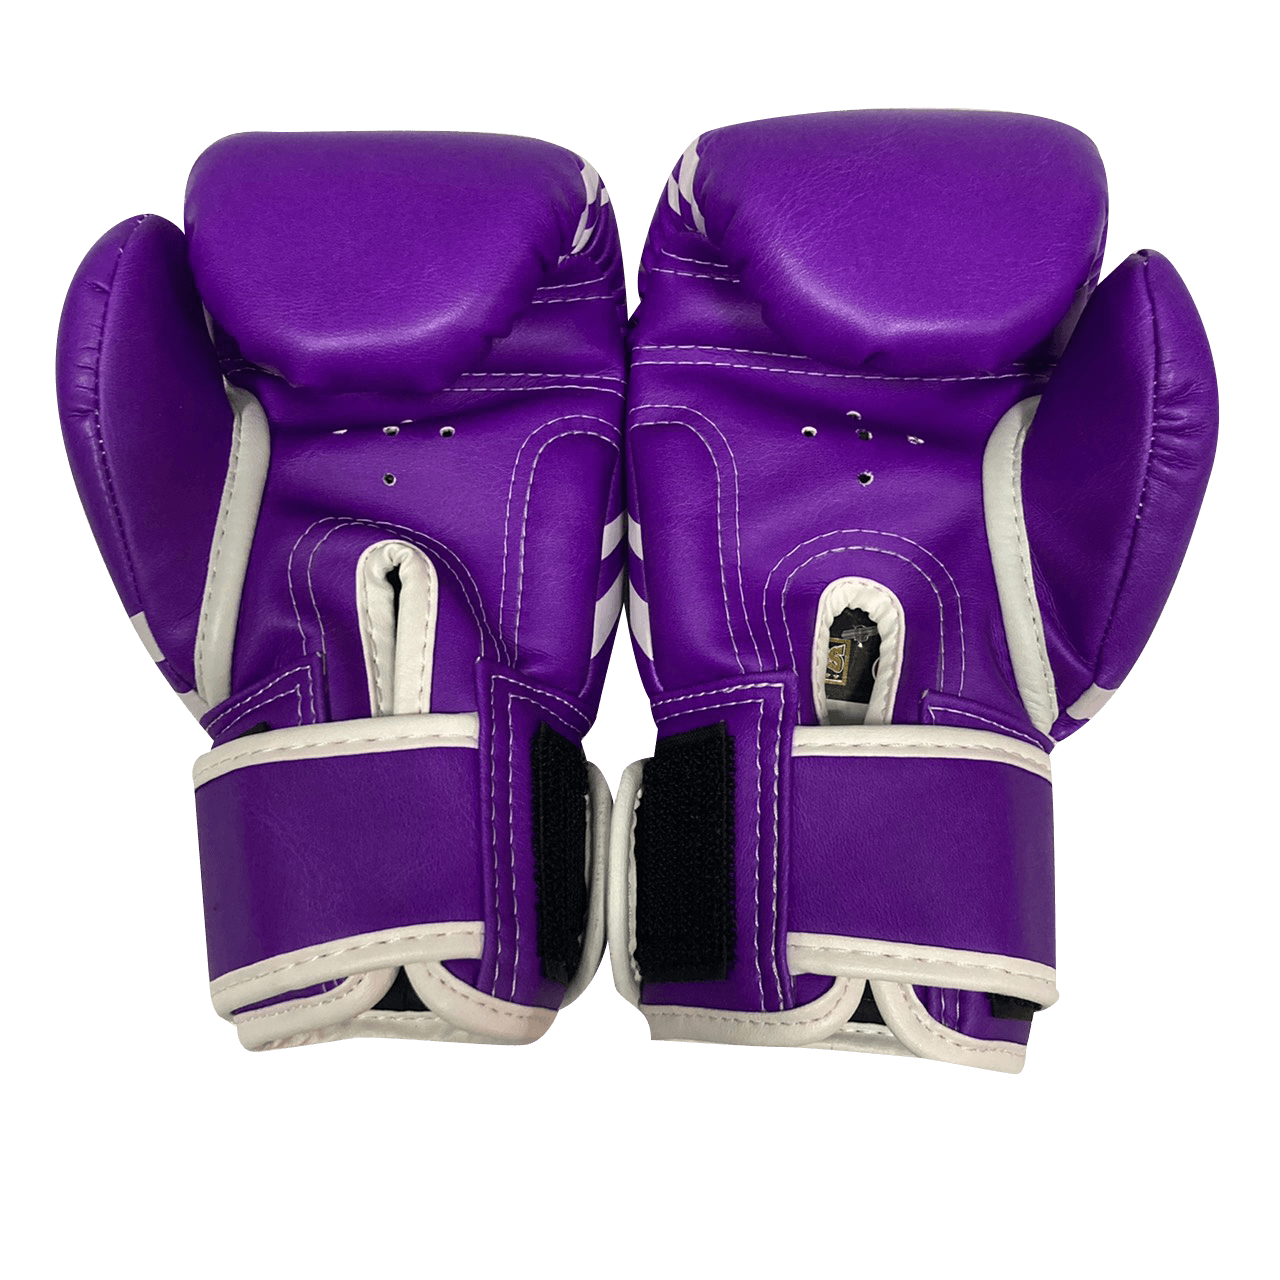 Twins Special Boxing Gloves KIDS FBGVSD3-TW6 Purple Black - SUPER EXPORT SHOP